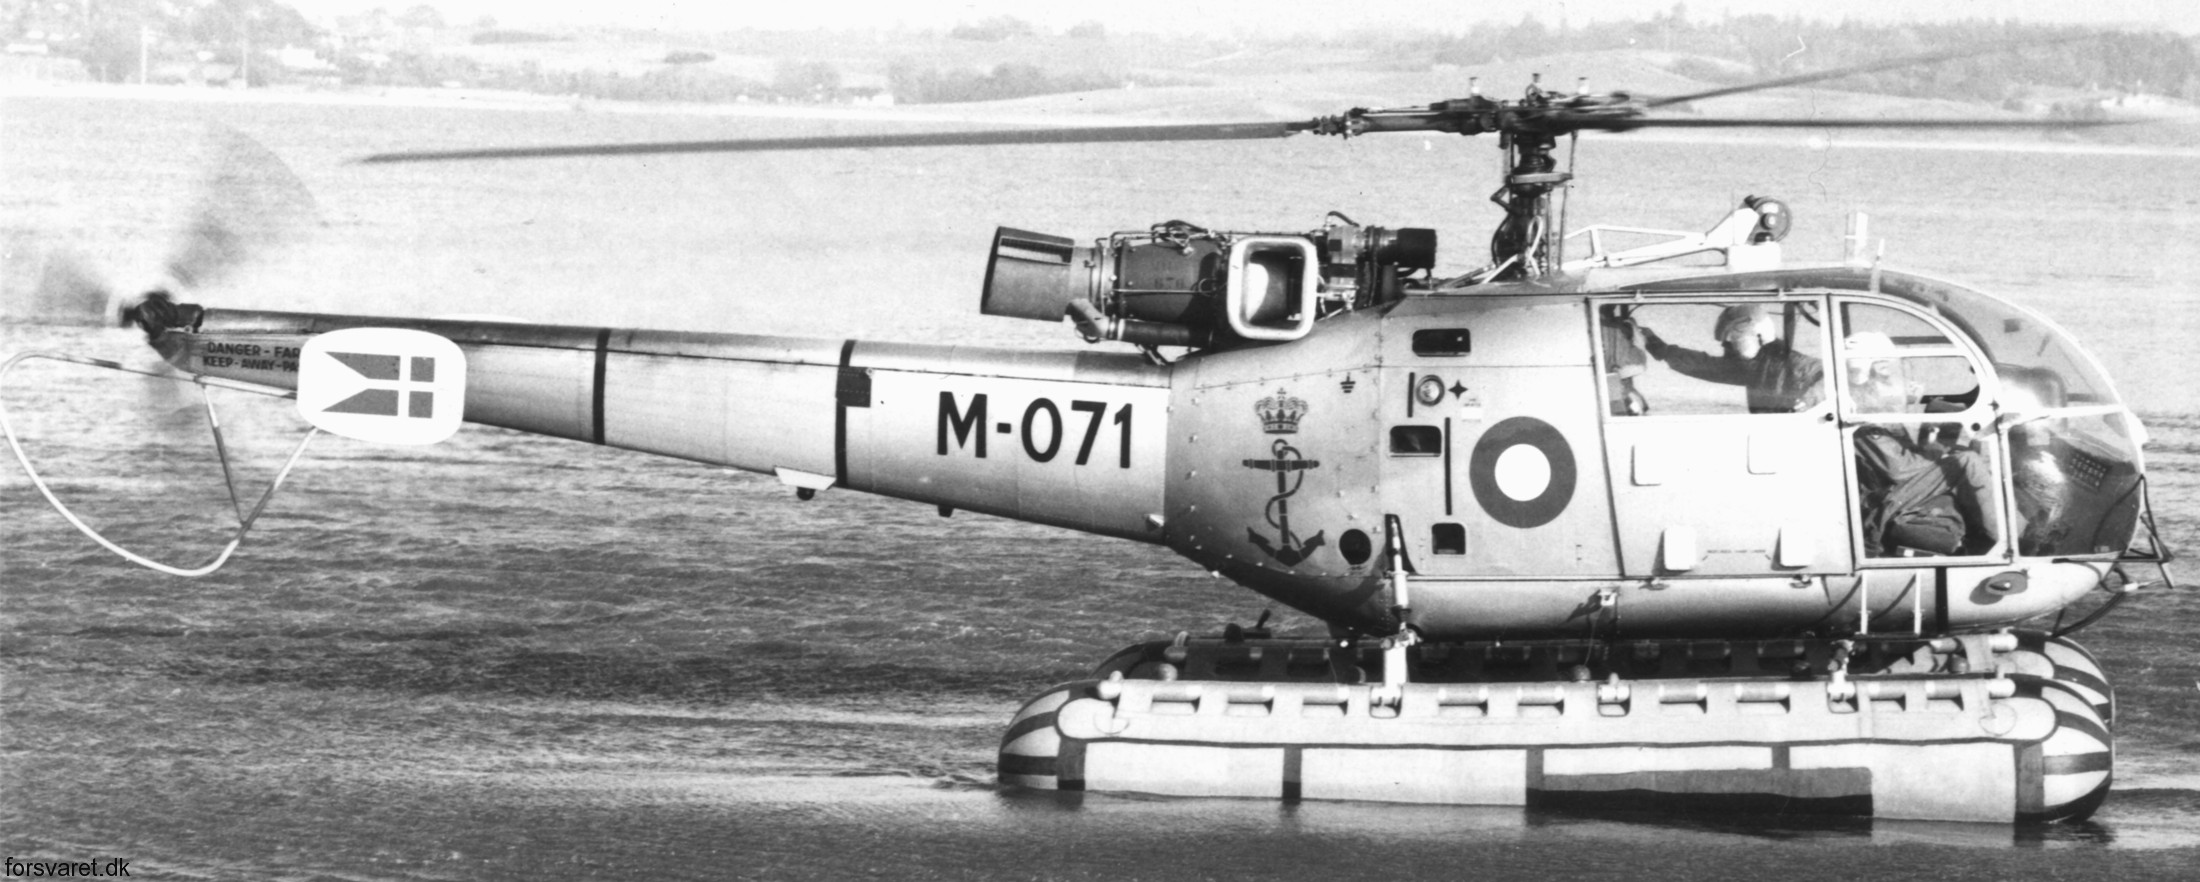 sa 316b alouette iii helicopter royal danish navy søværnet kongelige danske marine sud aviation m-071 19